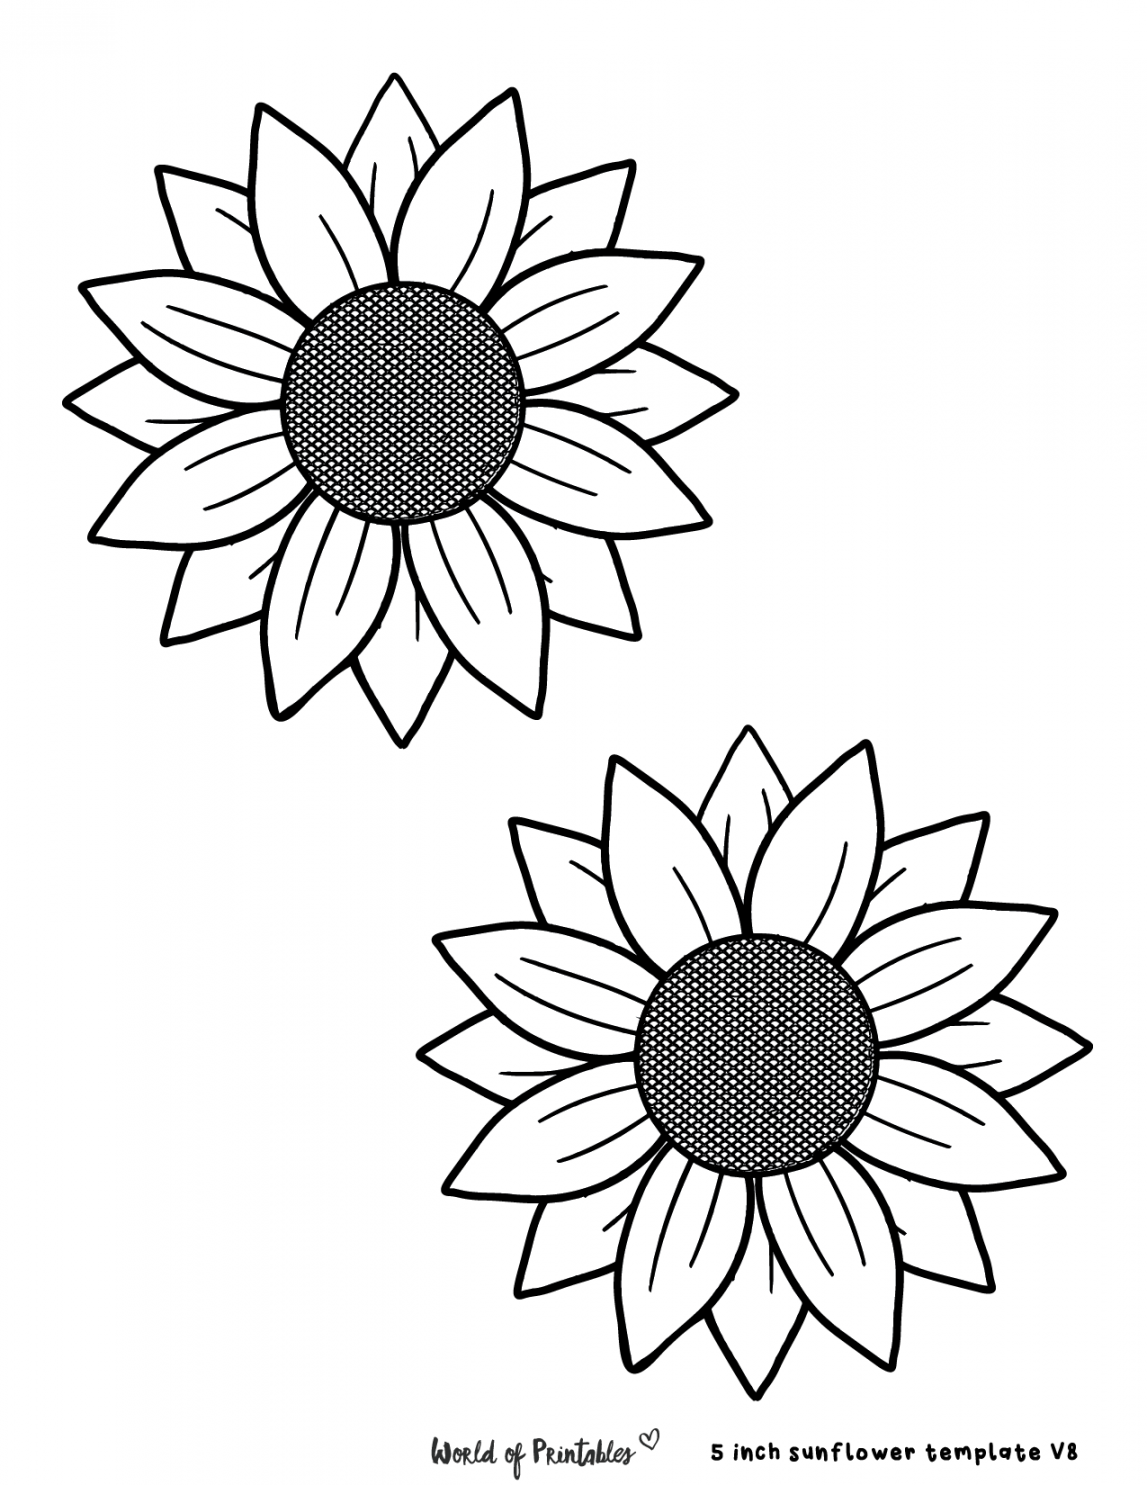 Best Sunflower Templates - World of Printables - FREE Printables - Printable Sunflowers